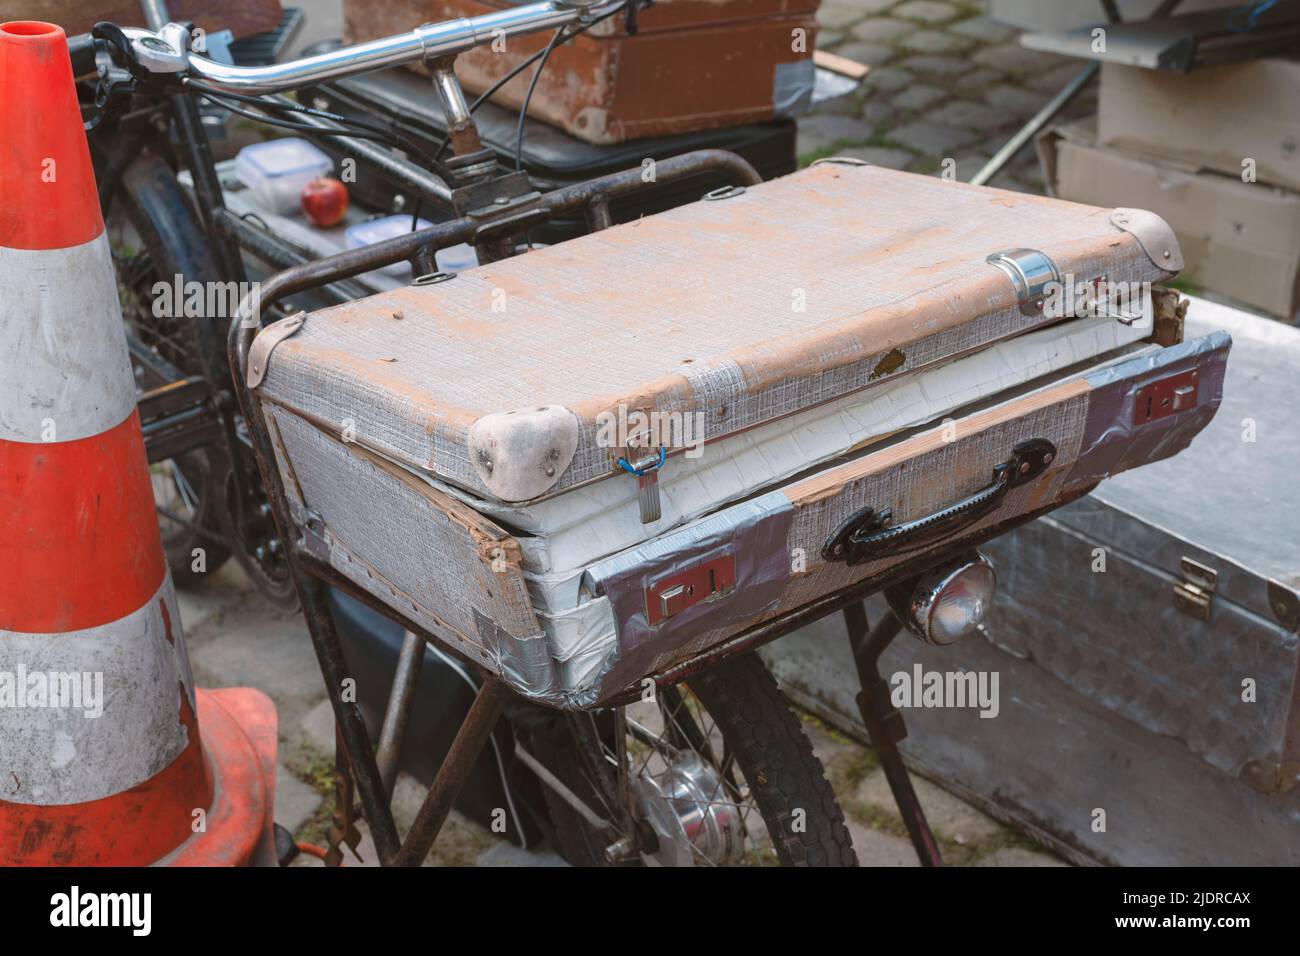 maleta desgastada de época en bicicleta vieja en el mercadillo Foto de stock